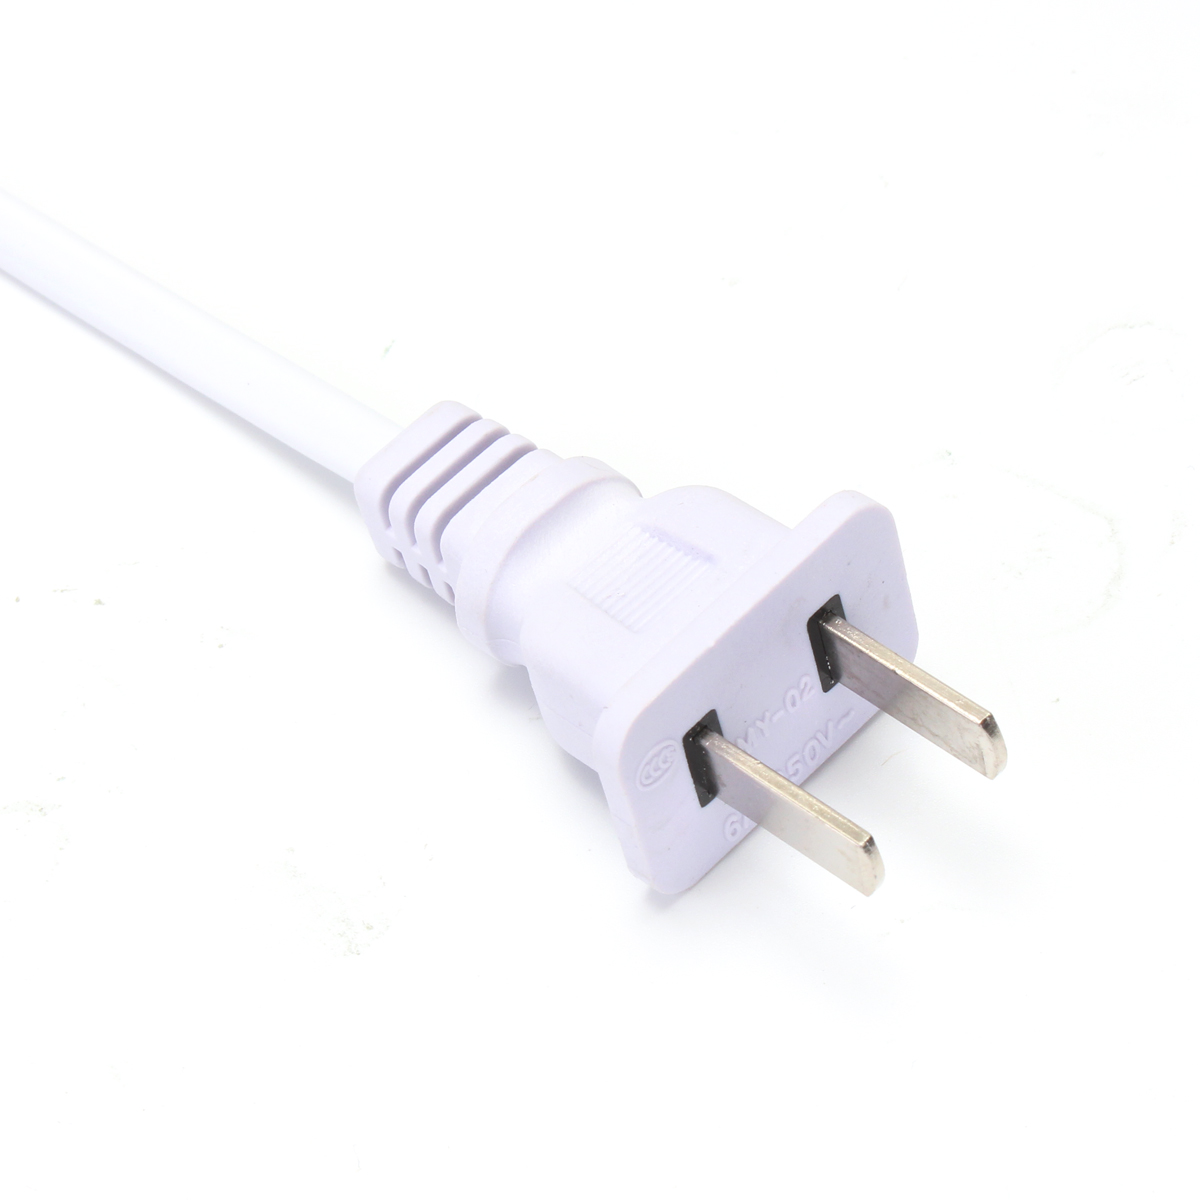 10CM-E27-Flexible-Bulb-Adapter-Lampholder-Socket-with-Clip-Dimming-Switch-EU-US-Plug-for-Pet-Light-1309715-4